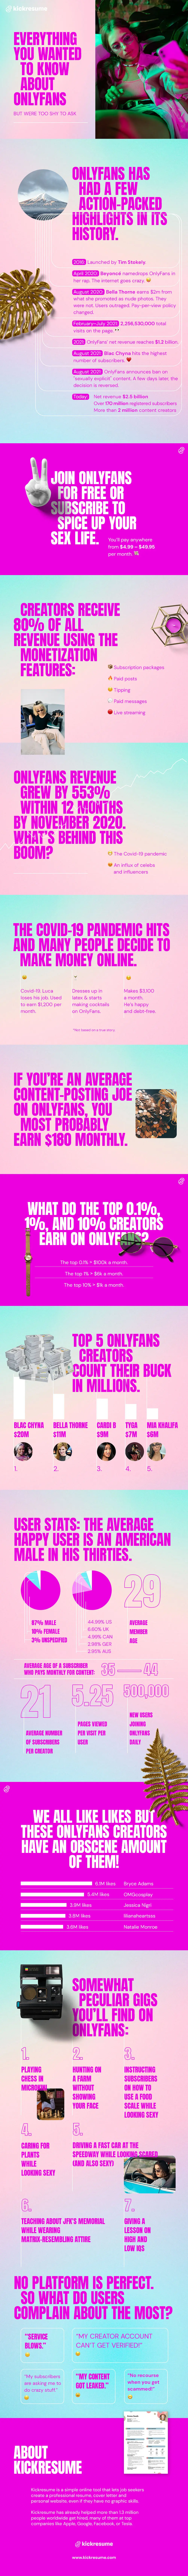 Onlyfans statistics infographic